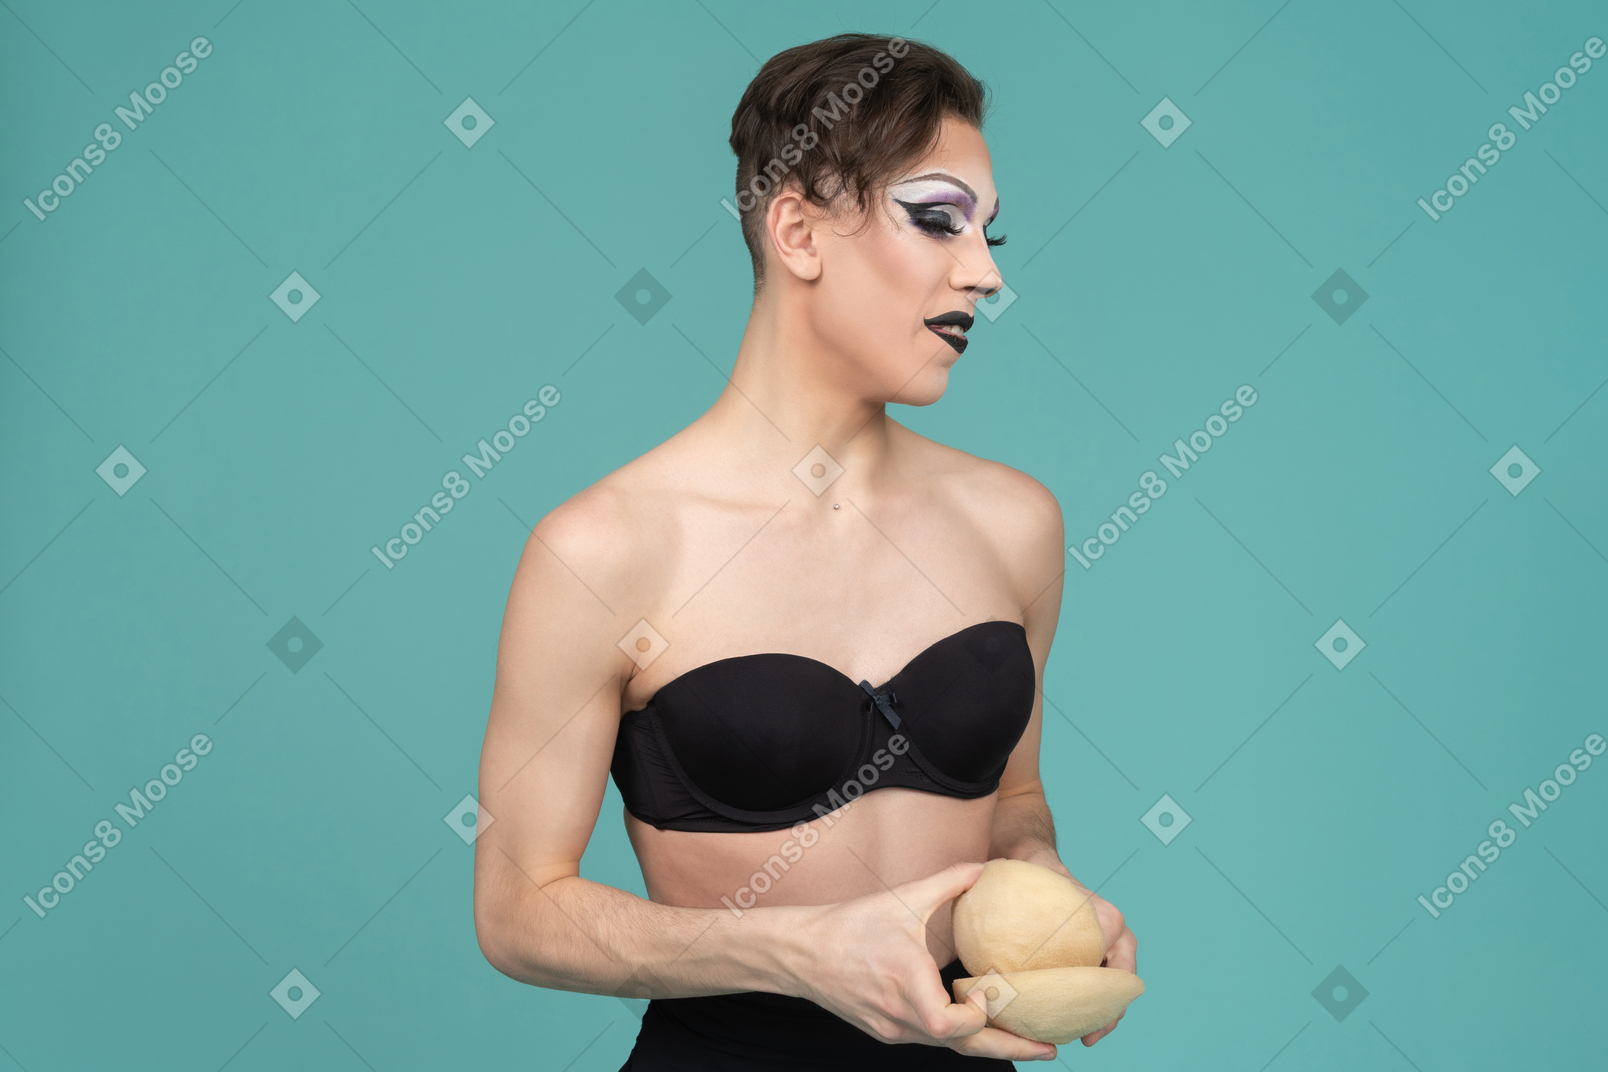 Drag queen holding bra inserts